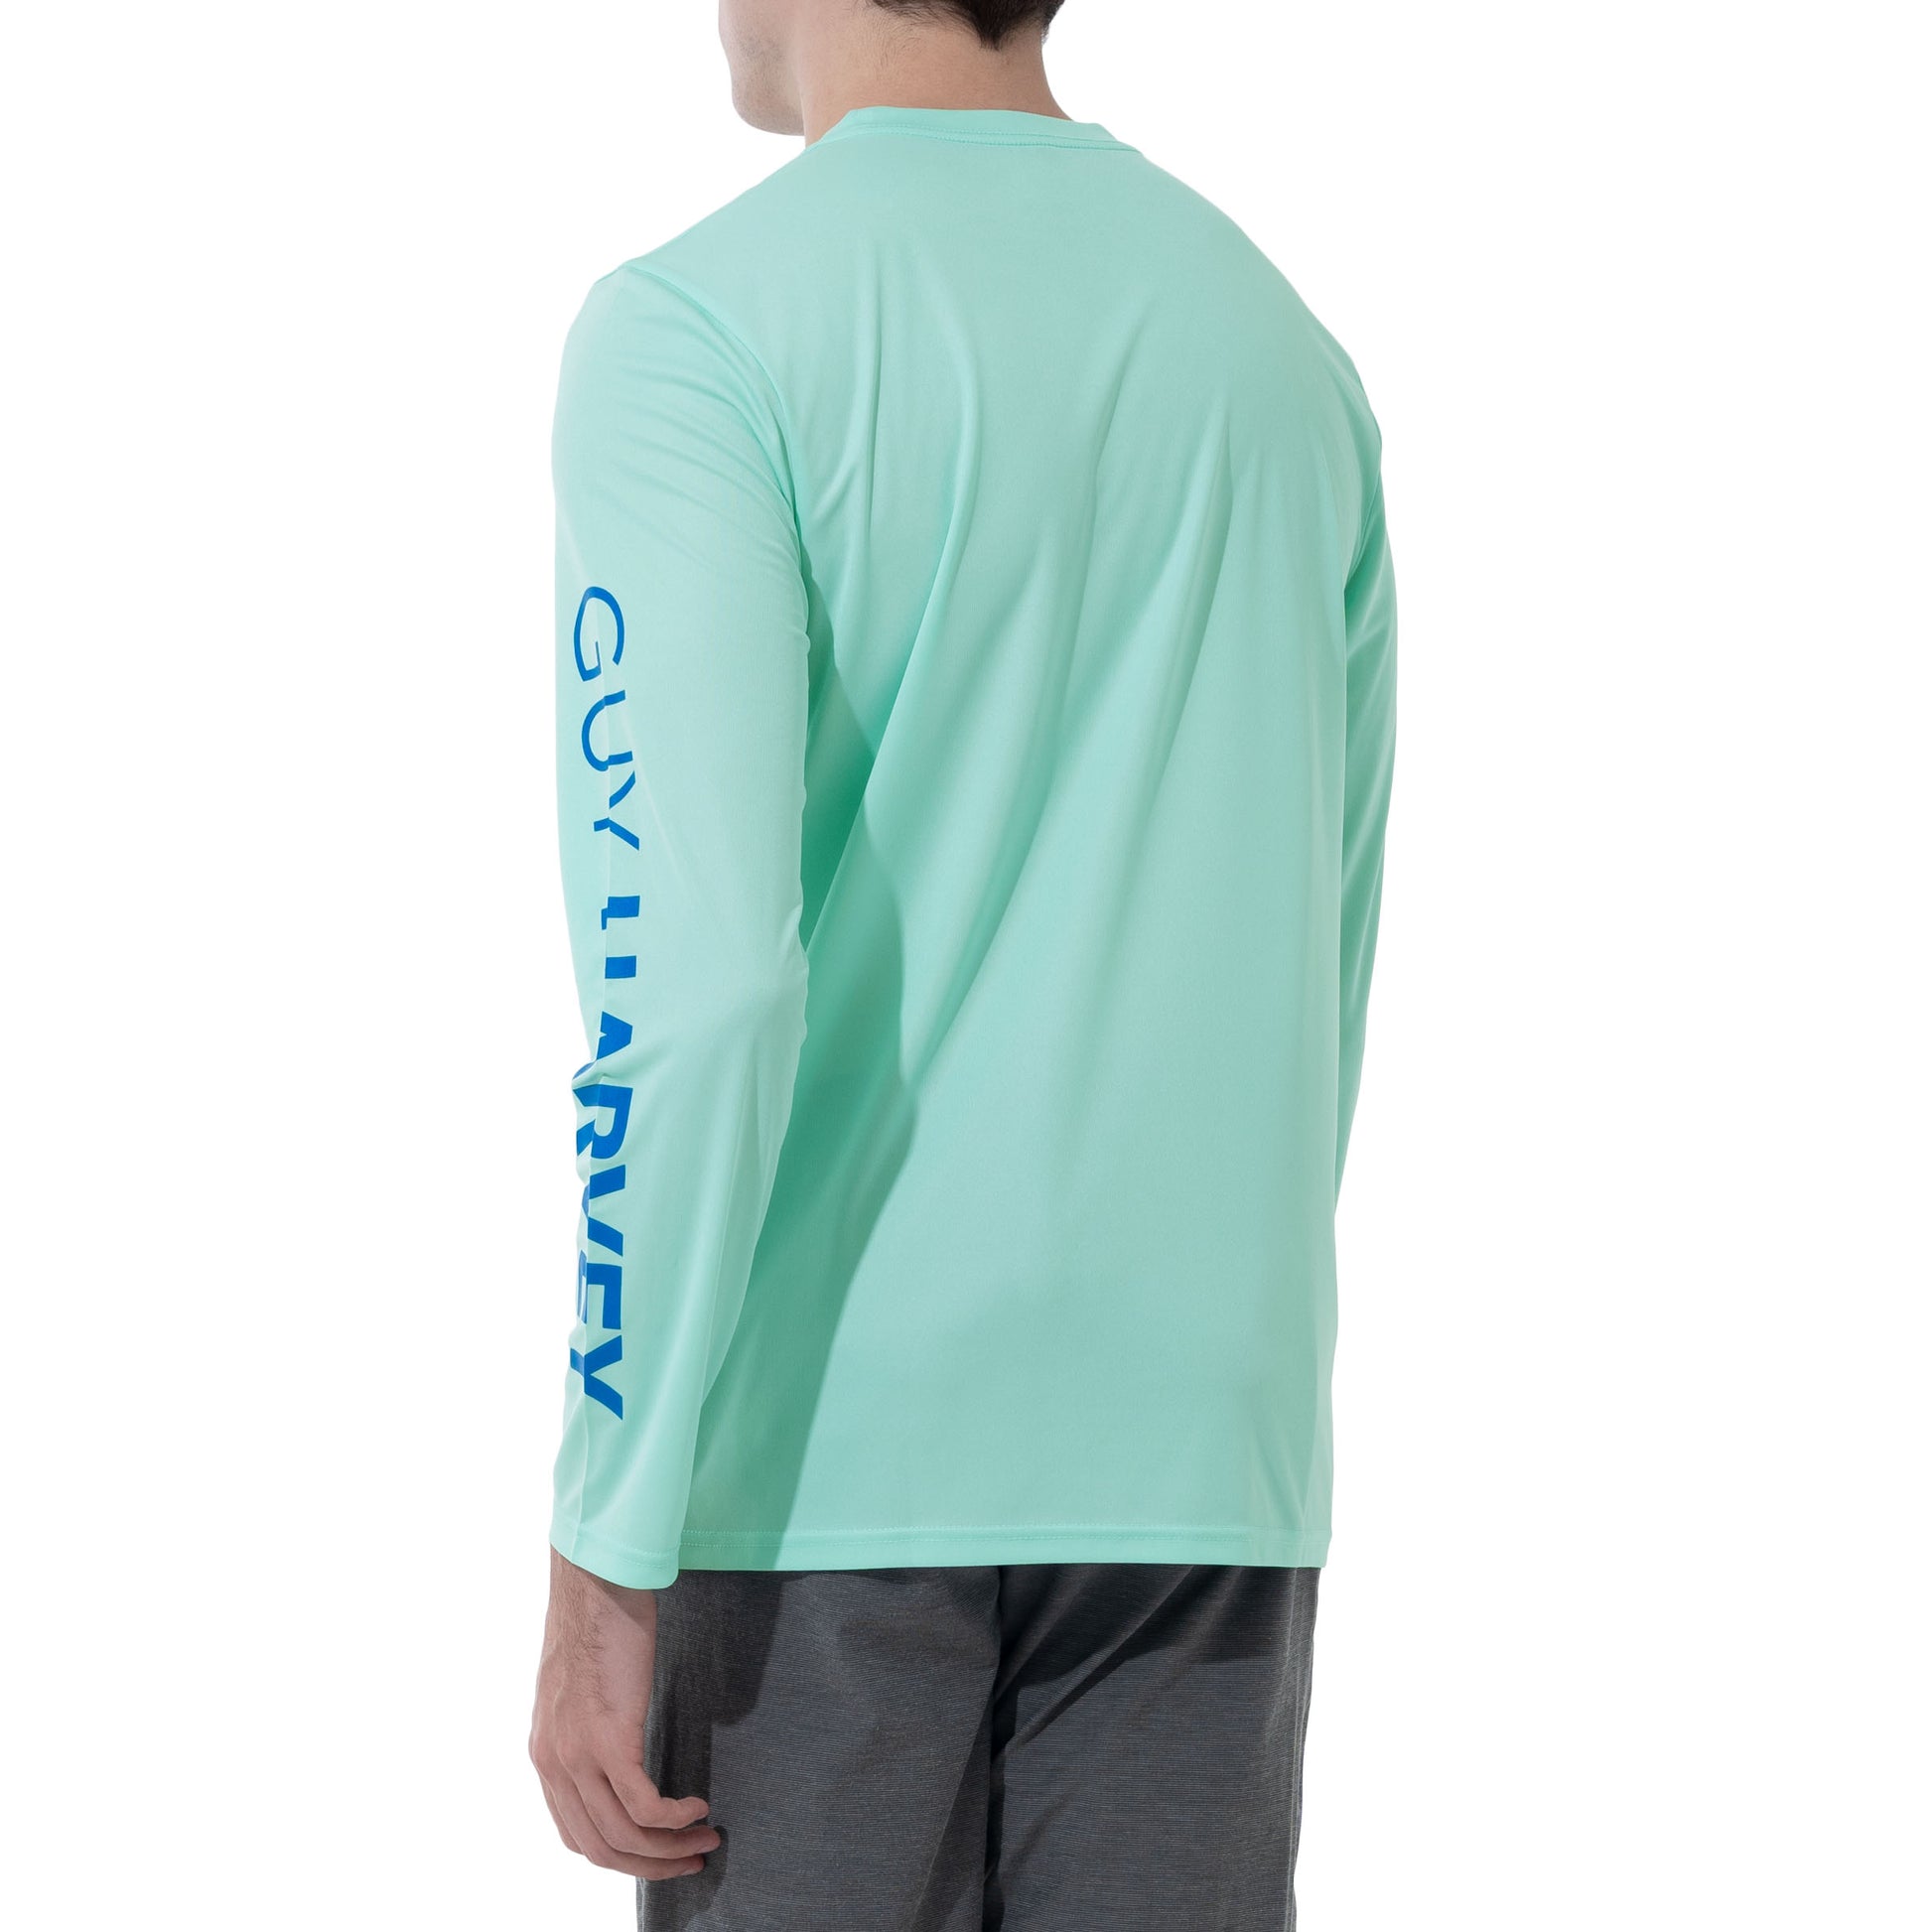 CRYSULLY Men's UPF 50+ Fishing Shirts Long Sleeve Sun Protection Hiking Zip  Tops